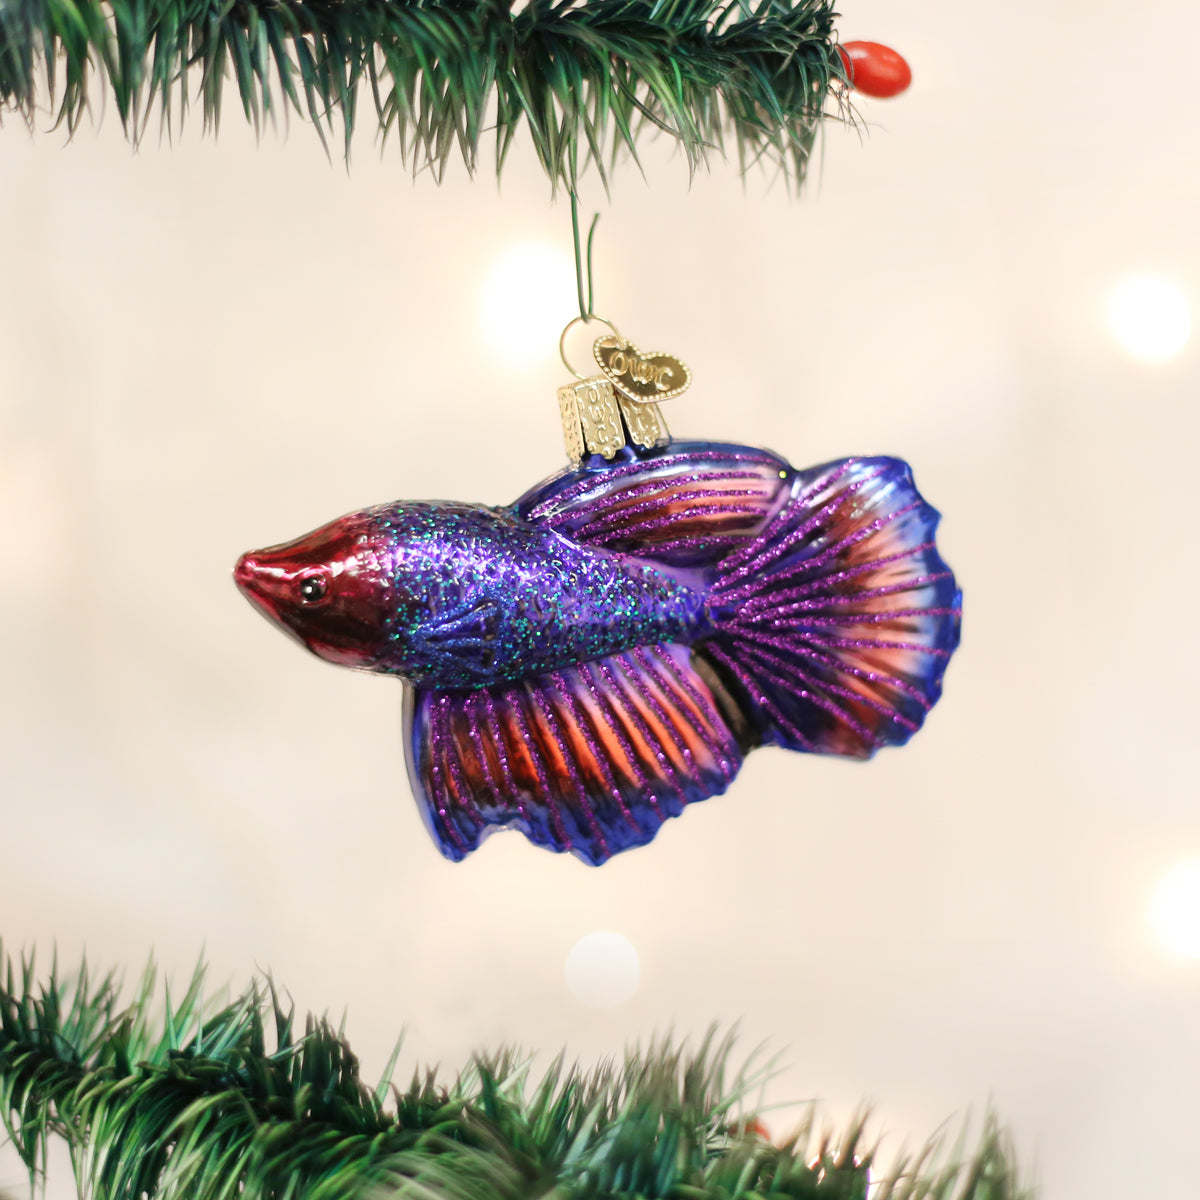 Old World Christmas Betta Fish Ornament    